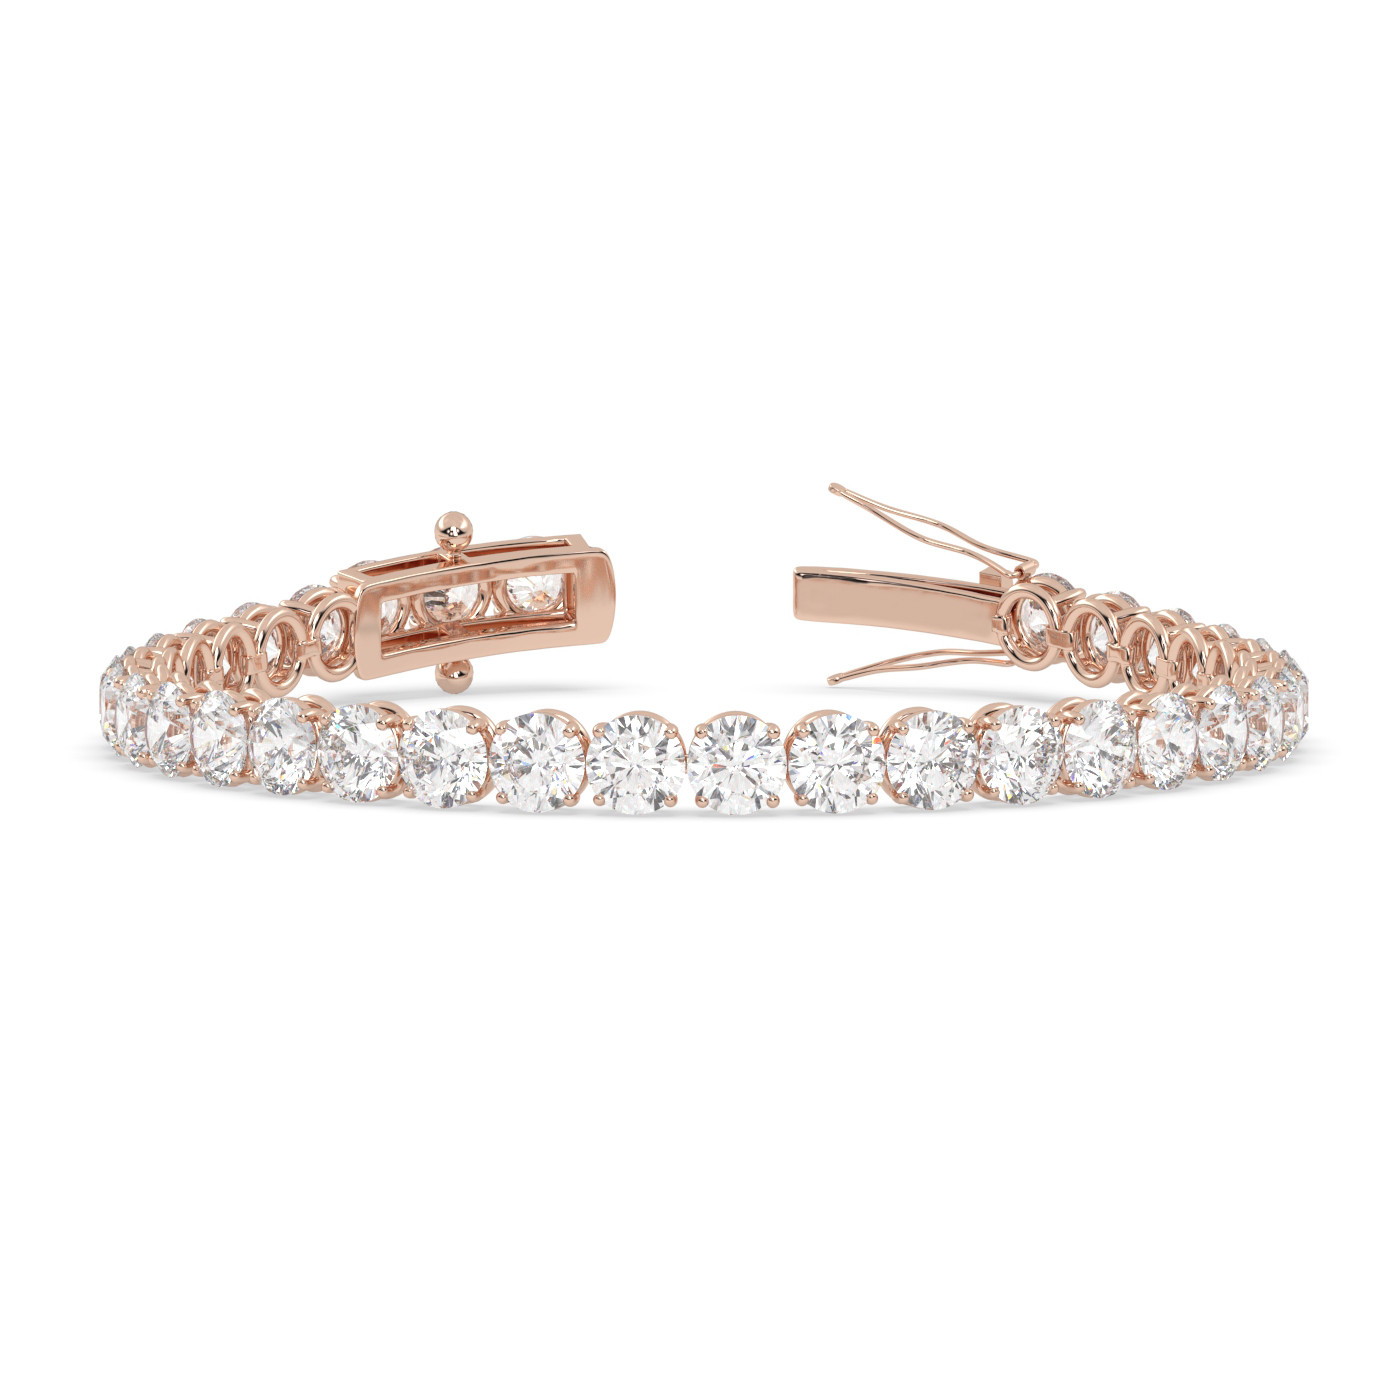 18k rose gold 17 carat round diamond tennis bracelet with traditional lock sytem